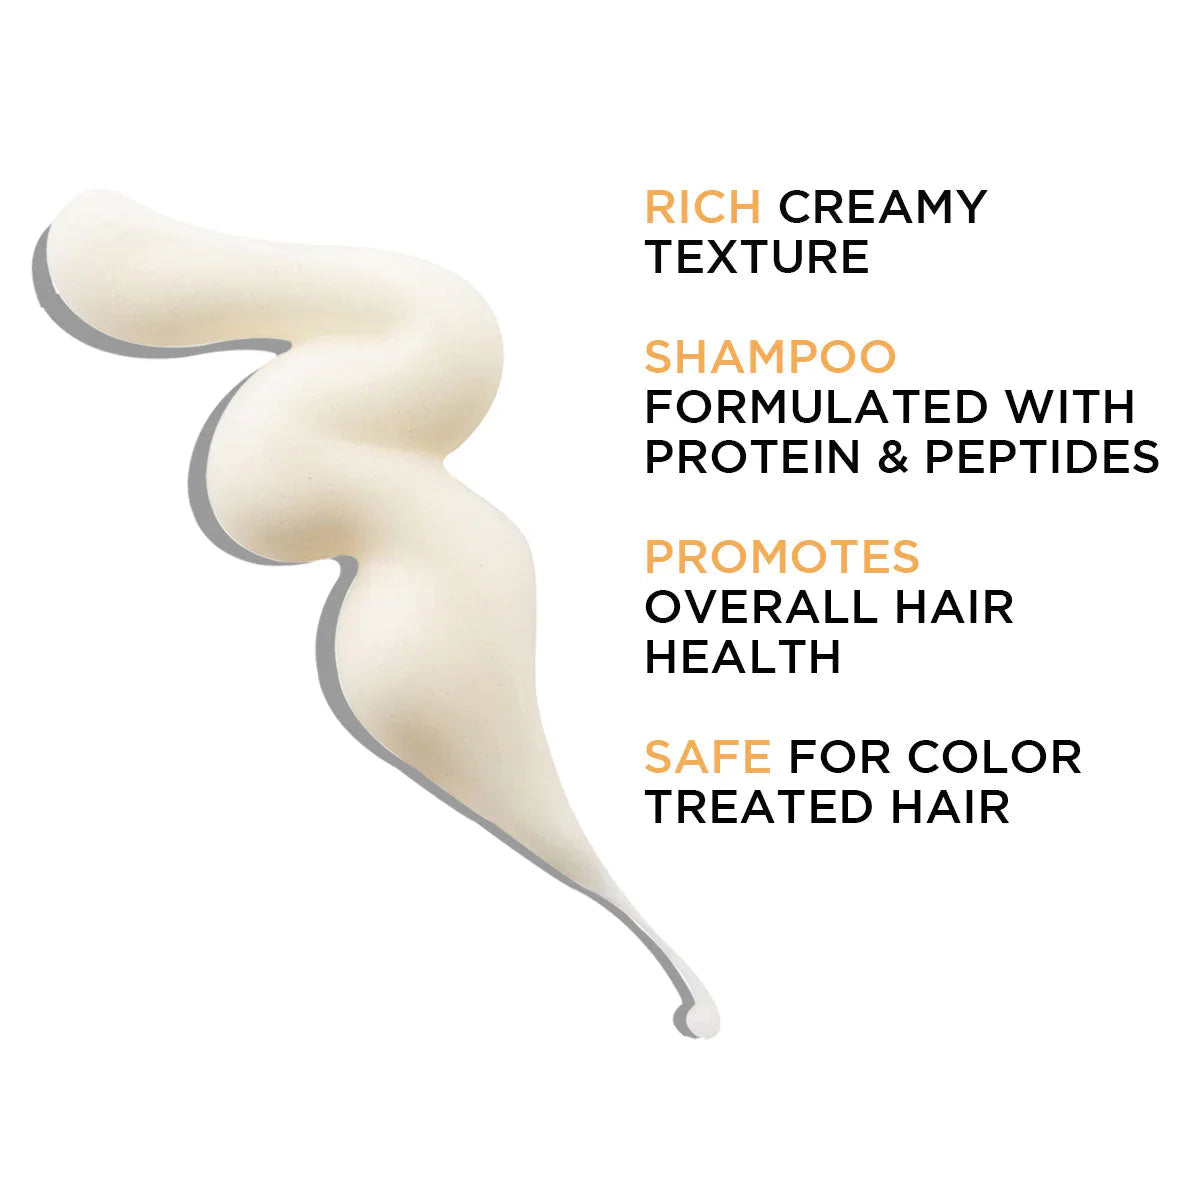 GK Hair Moisturizing Shampoo Color Protection, Shampoo from GK